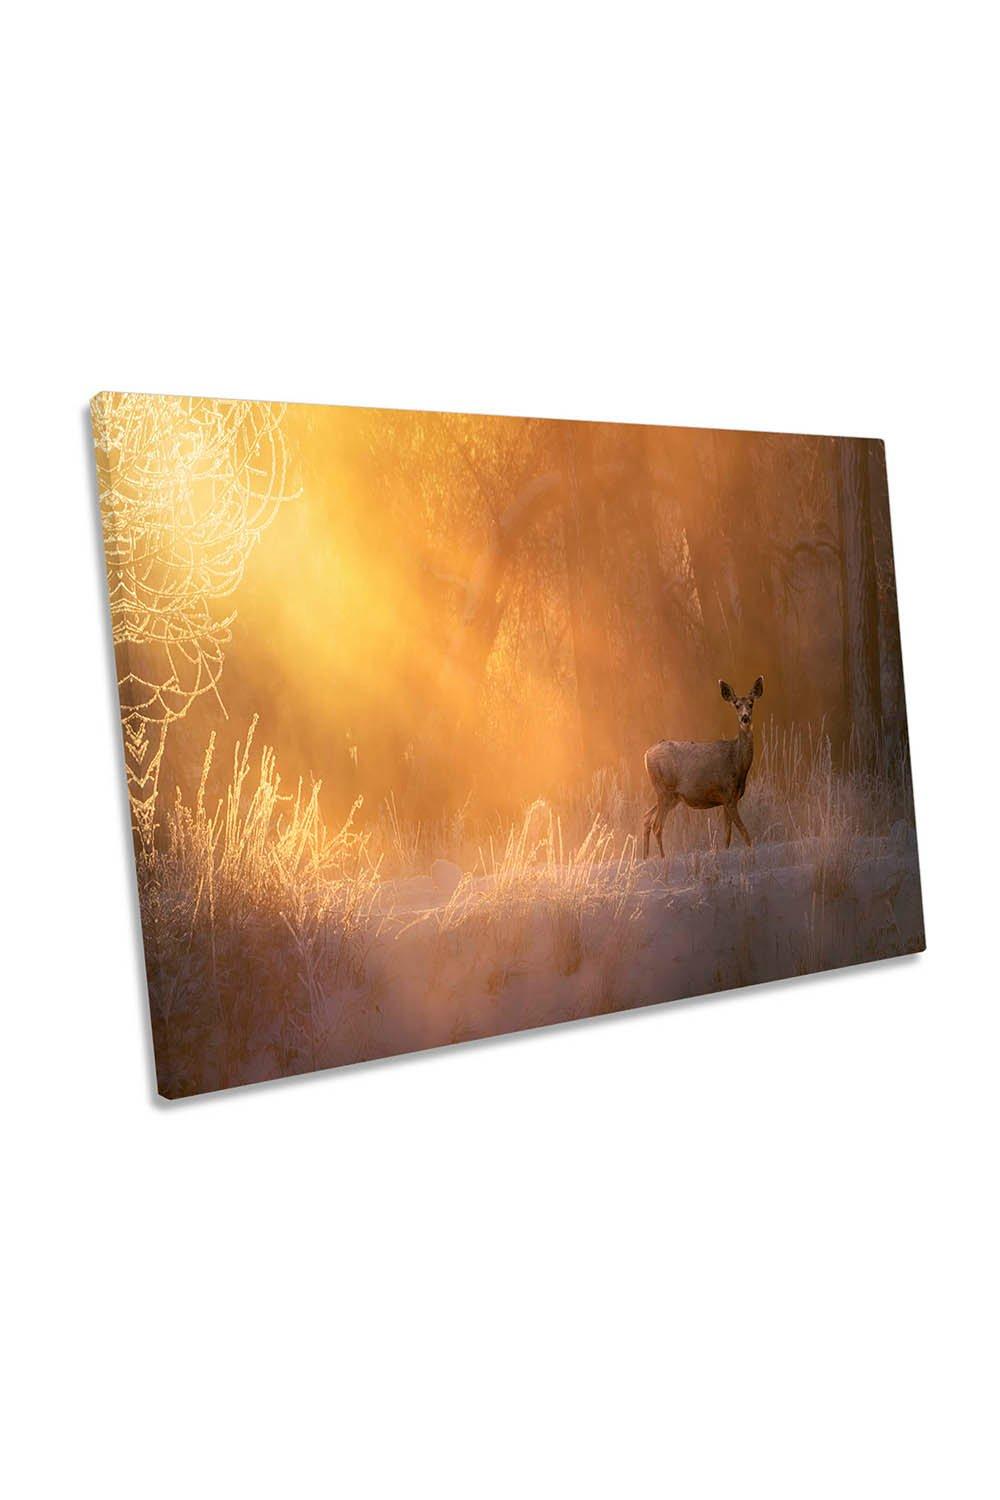 Good Morning Sunrise Deer Wildlife Canvas Wall Art Picture Print